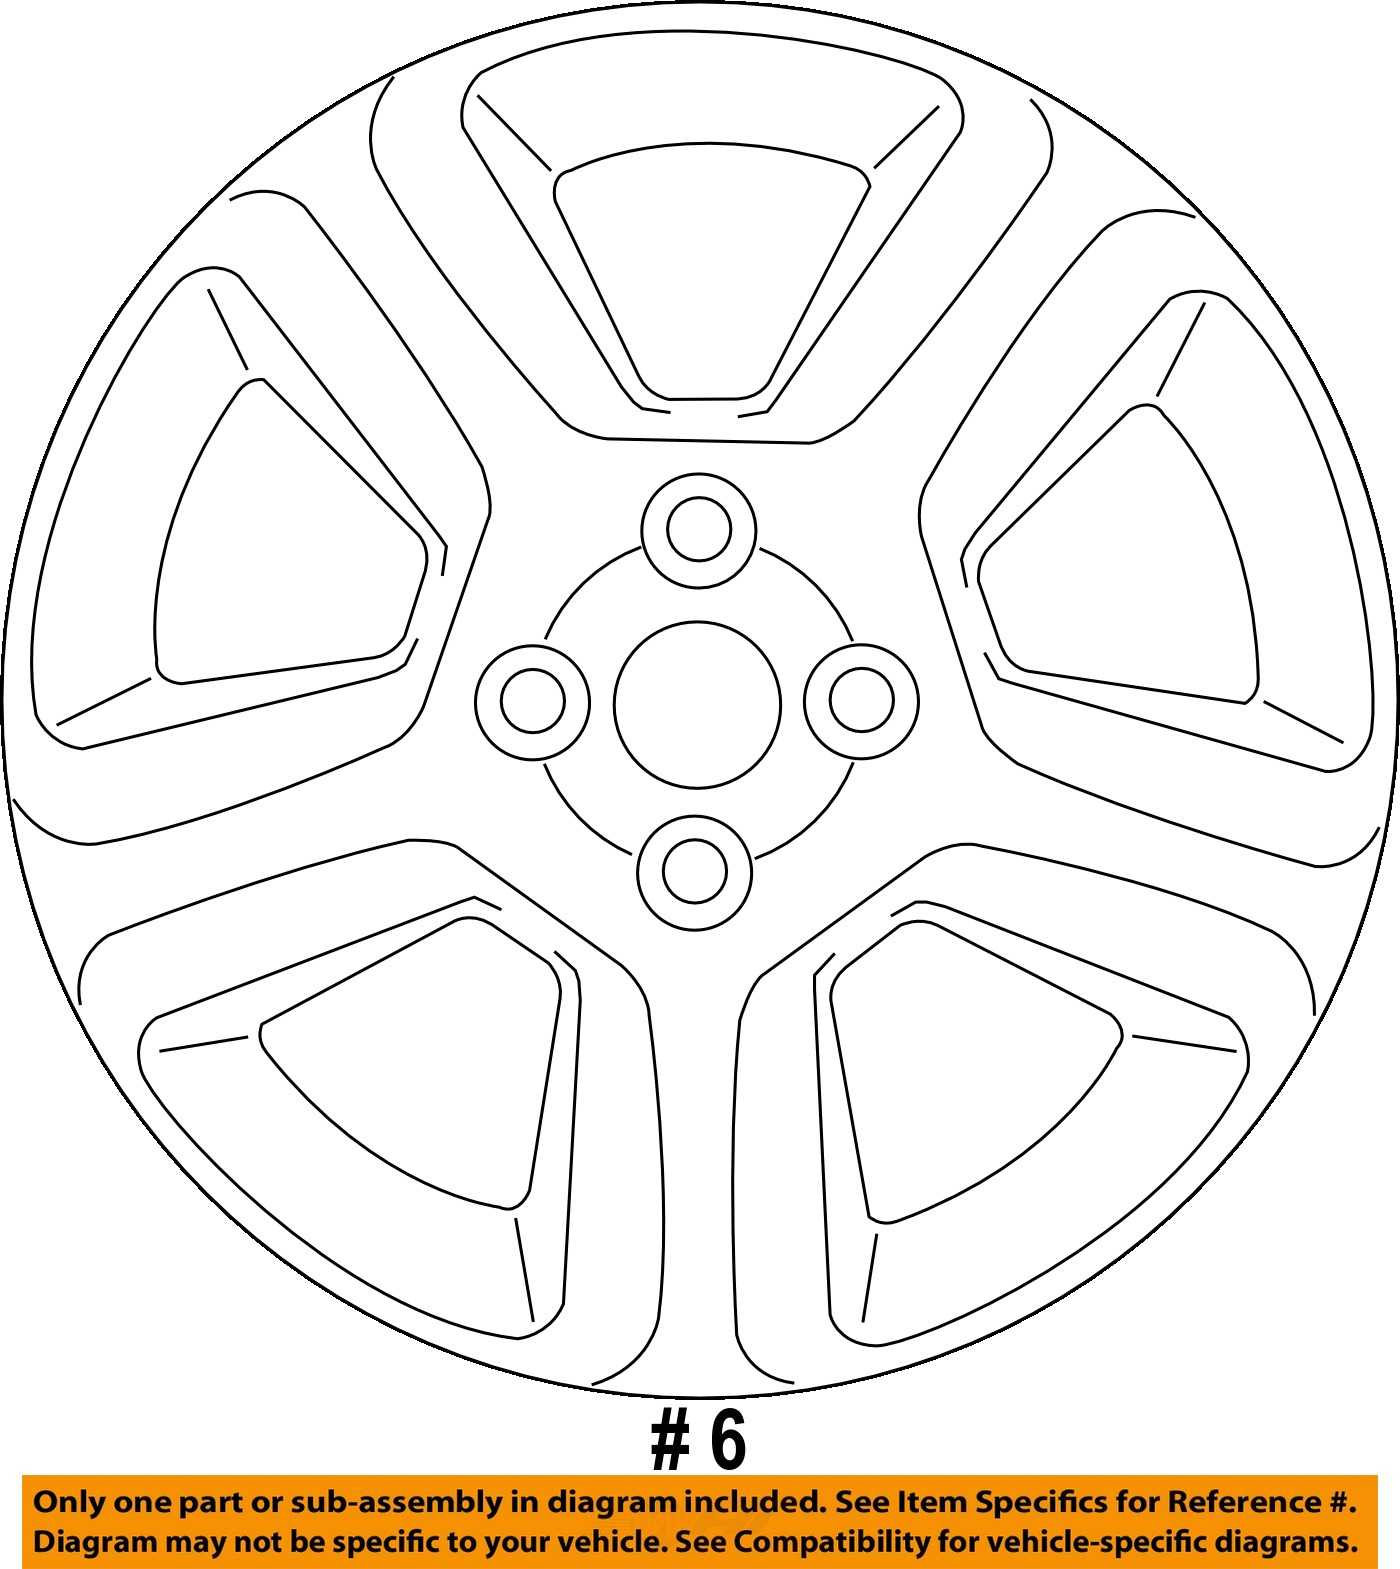 Nissan sentra oem wheel cover #5